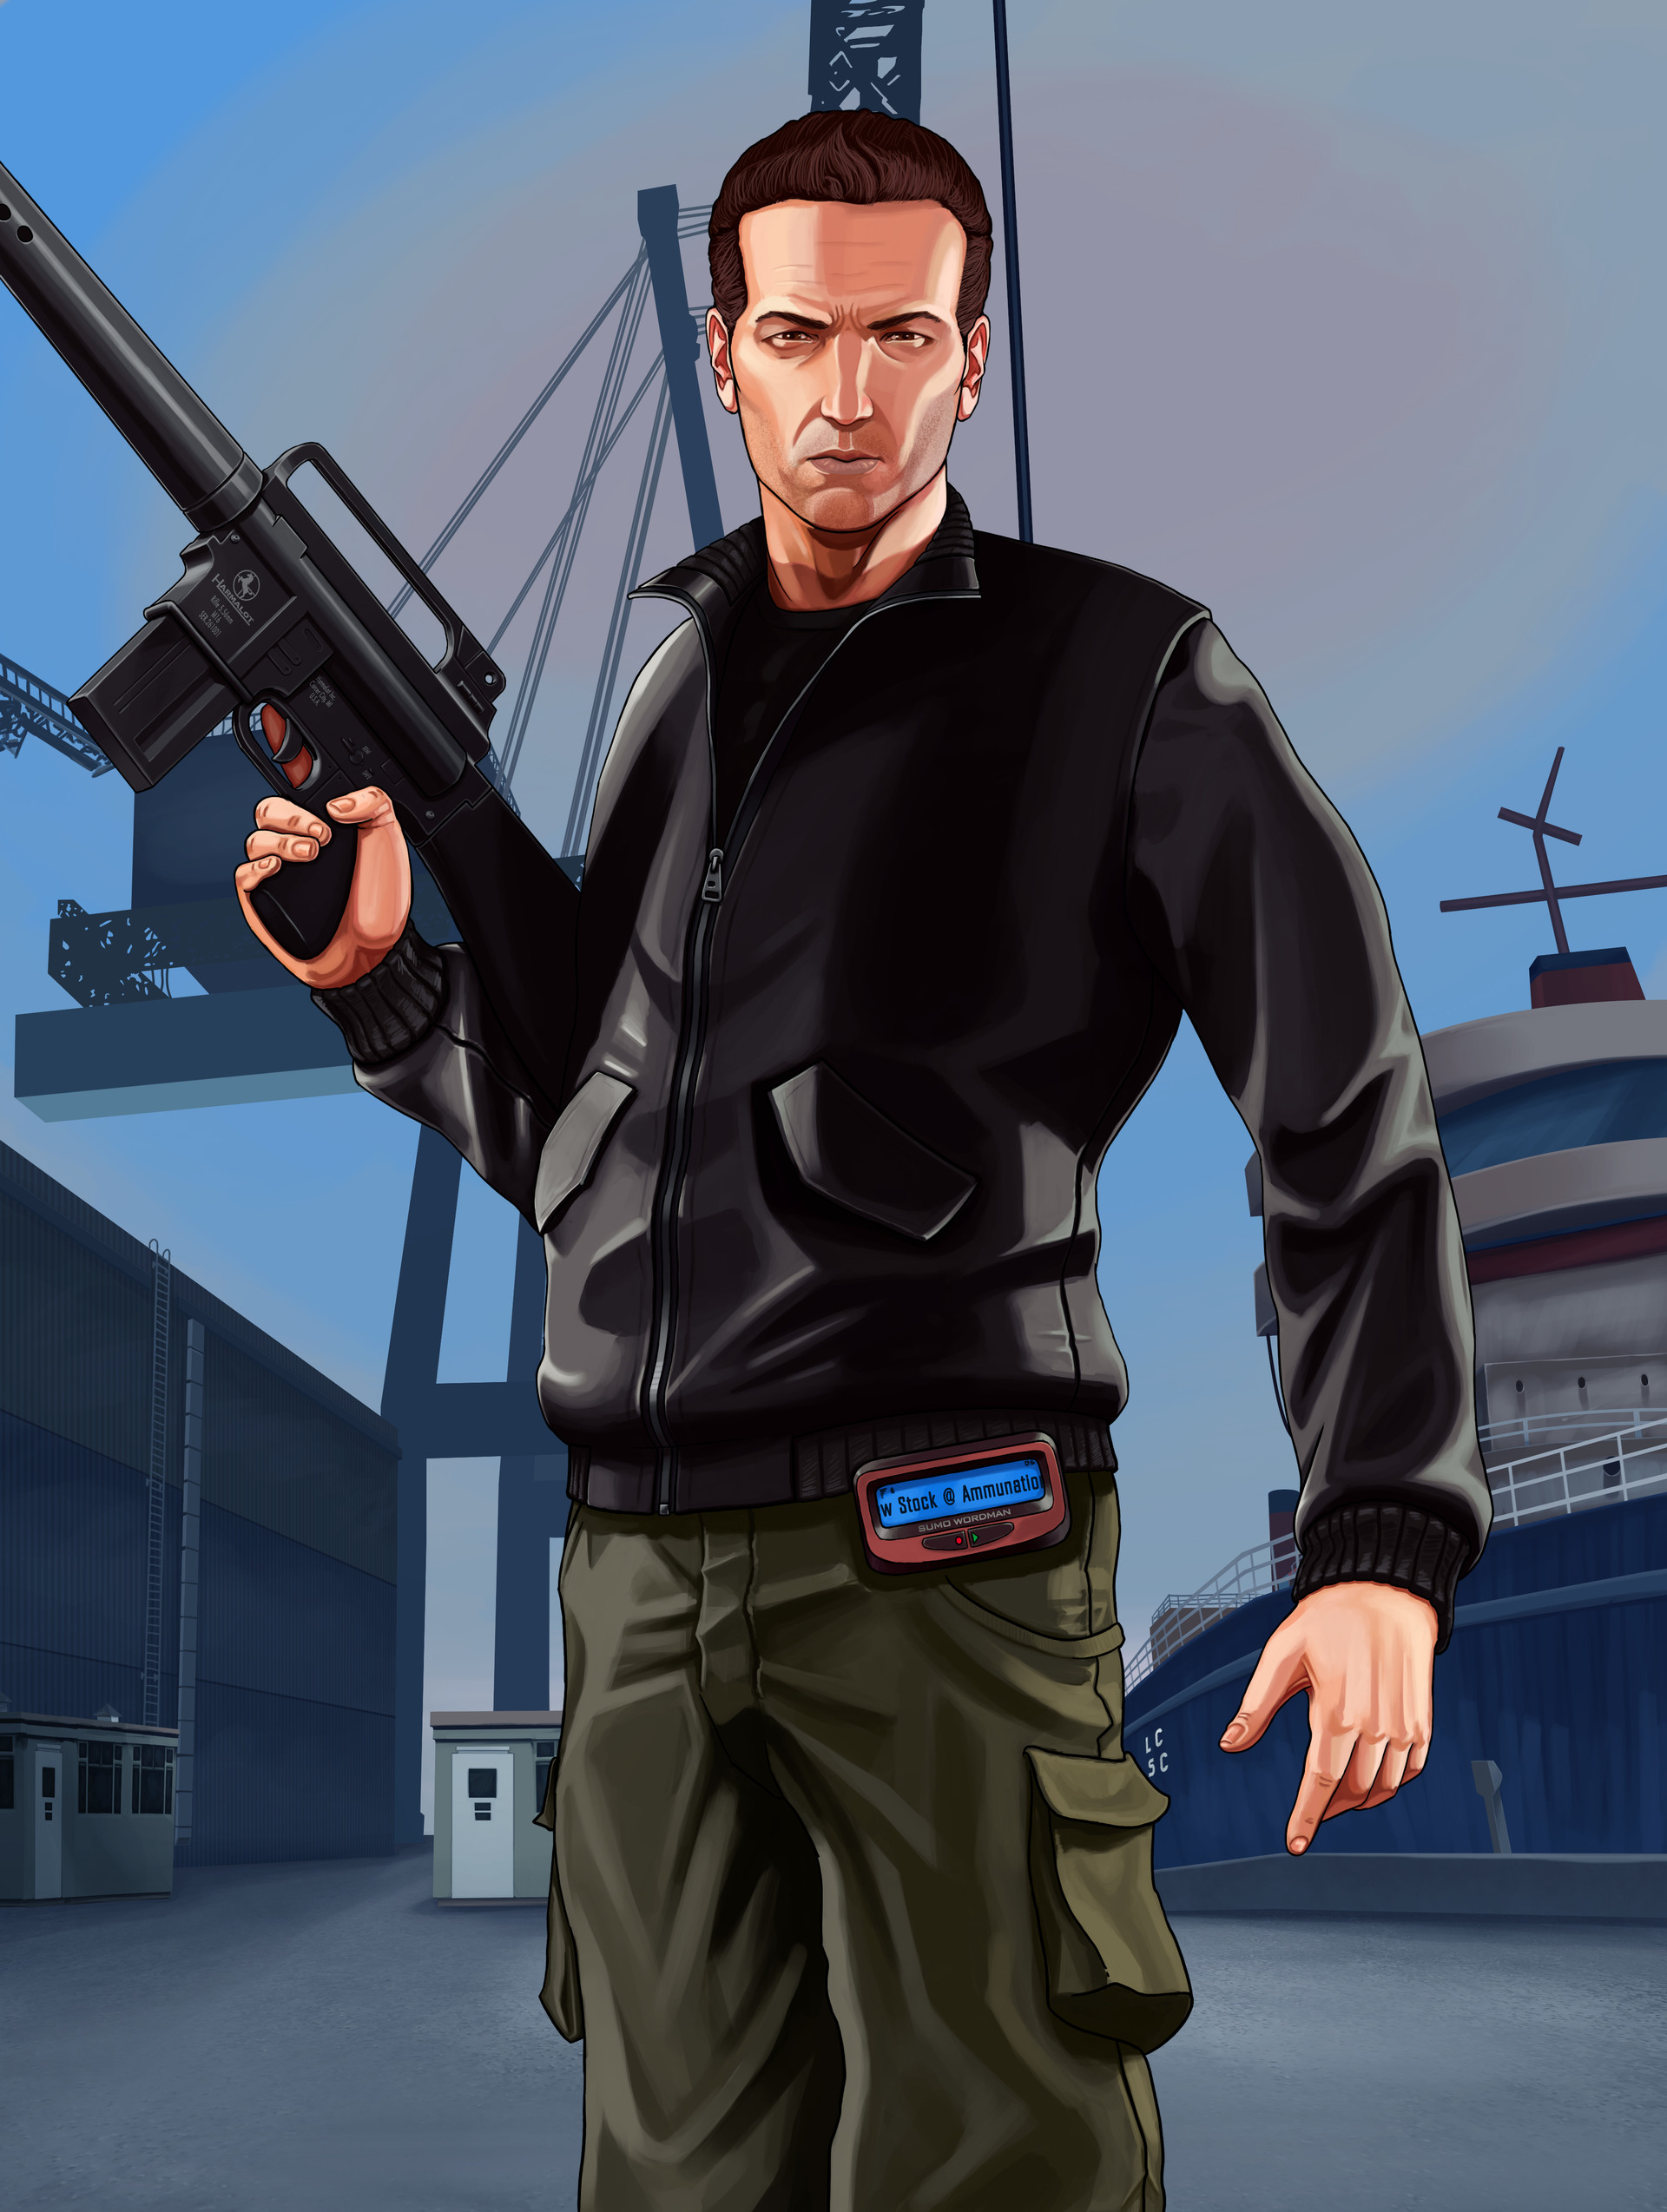 MVL) GTA III Panto addon - Grand Theft Auto: Vice City - ModDB